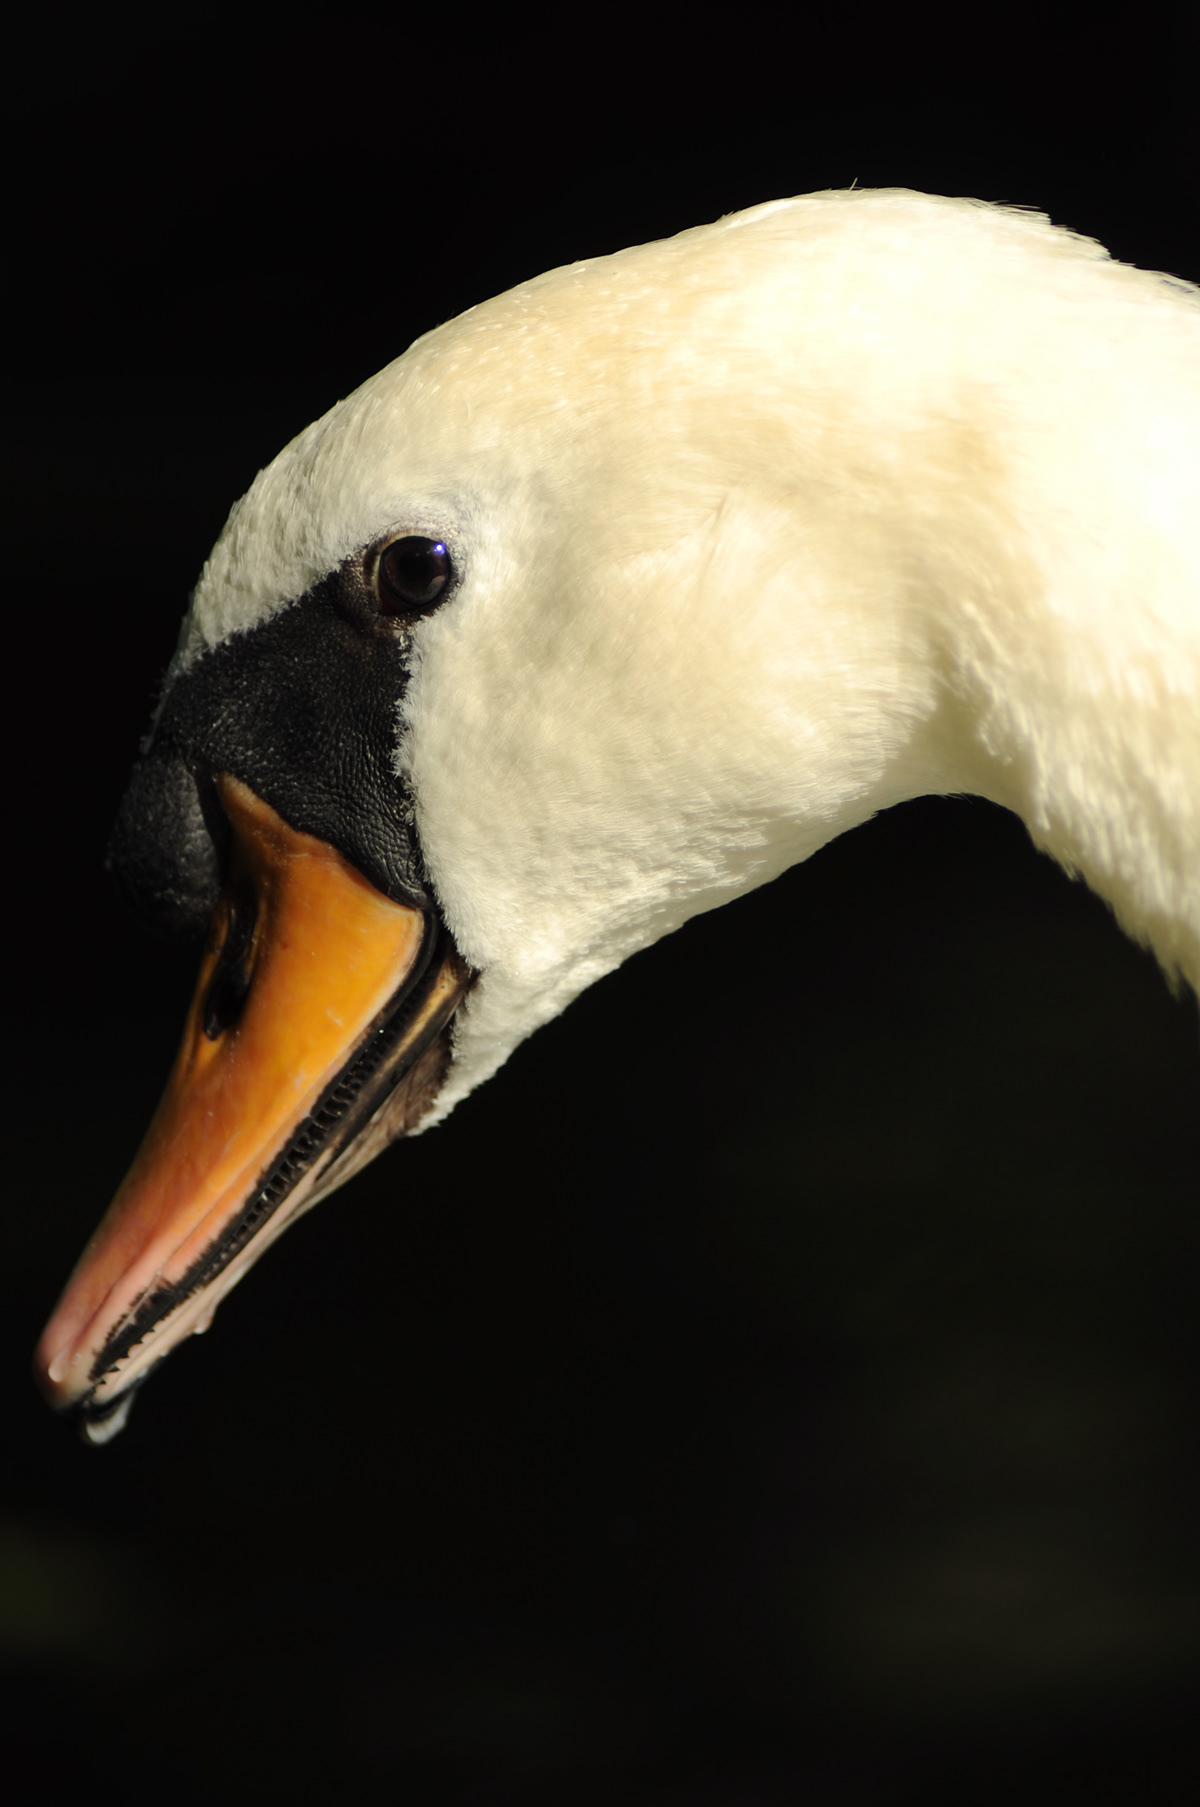 mute swan swans bird birds wildlife dublin Ireland irish White feathers water Park Nature pond